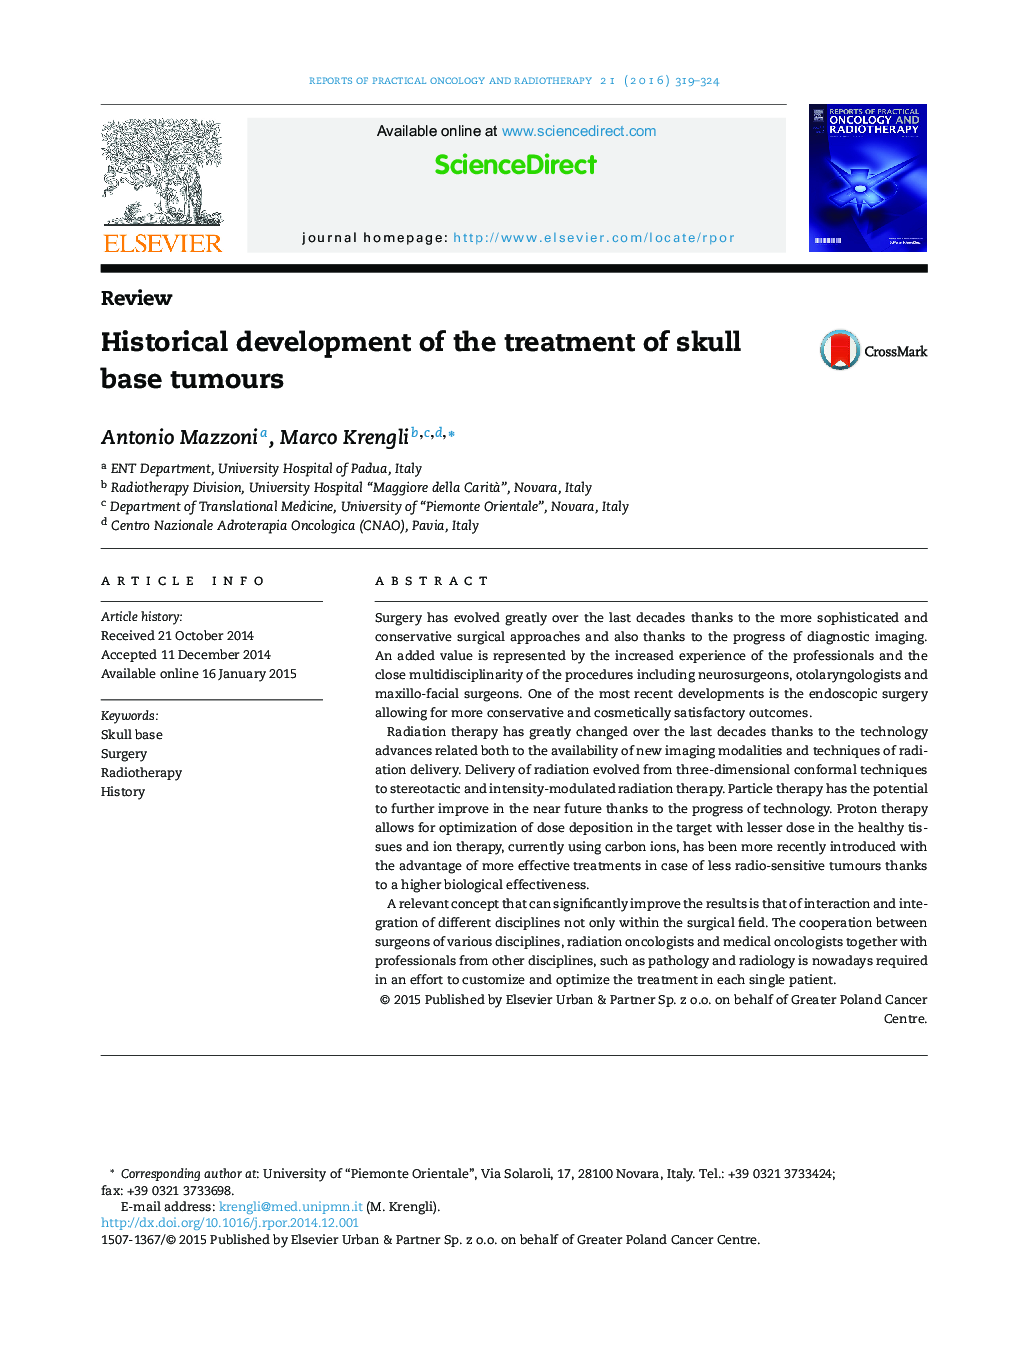 Historical development of the treatment of skull base tumours